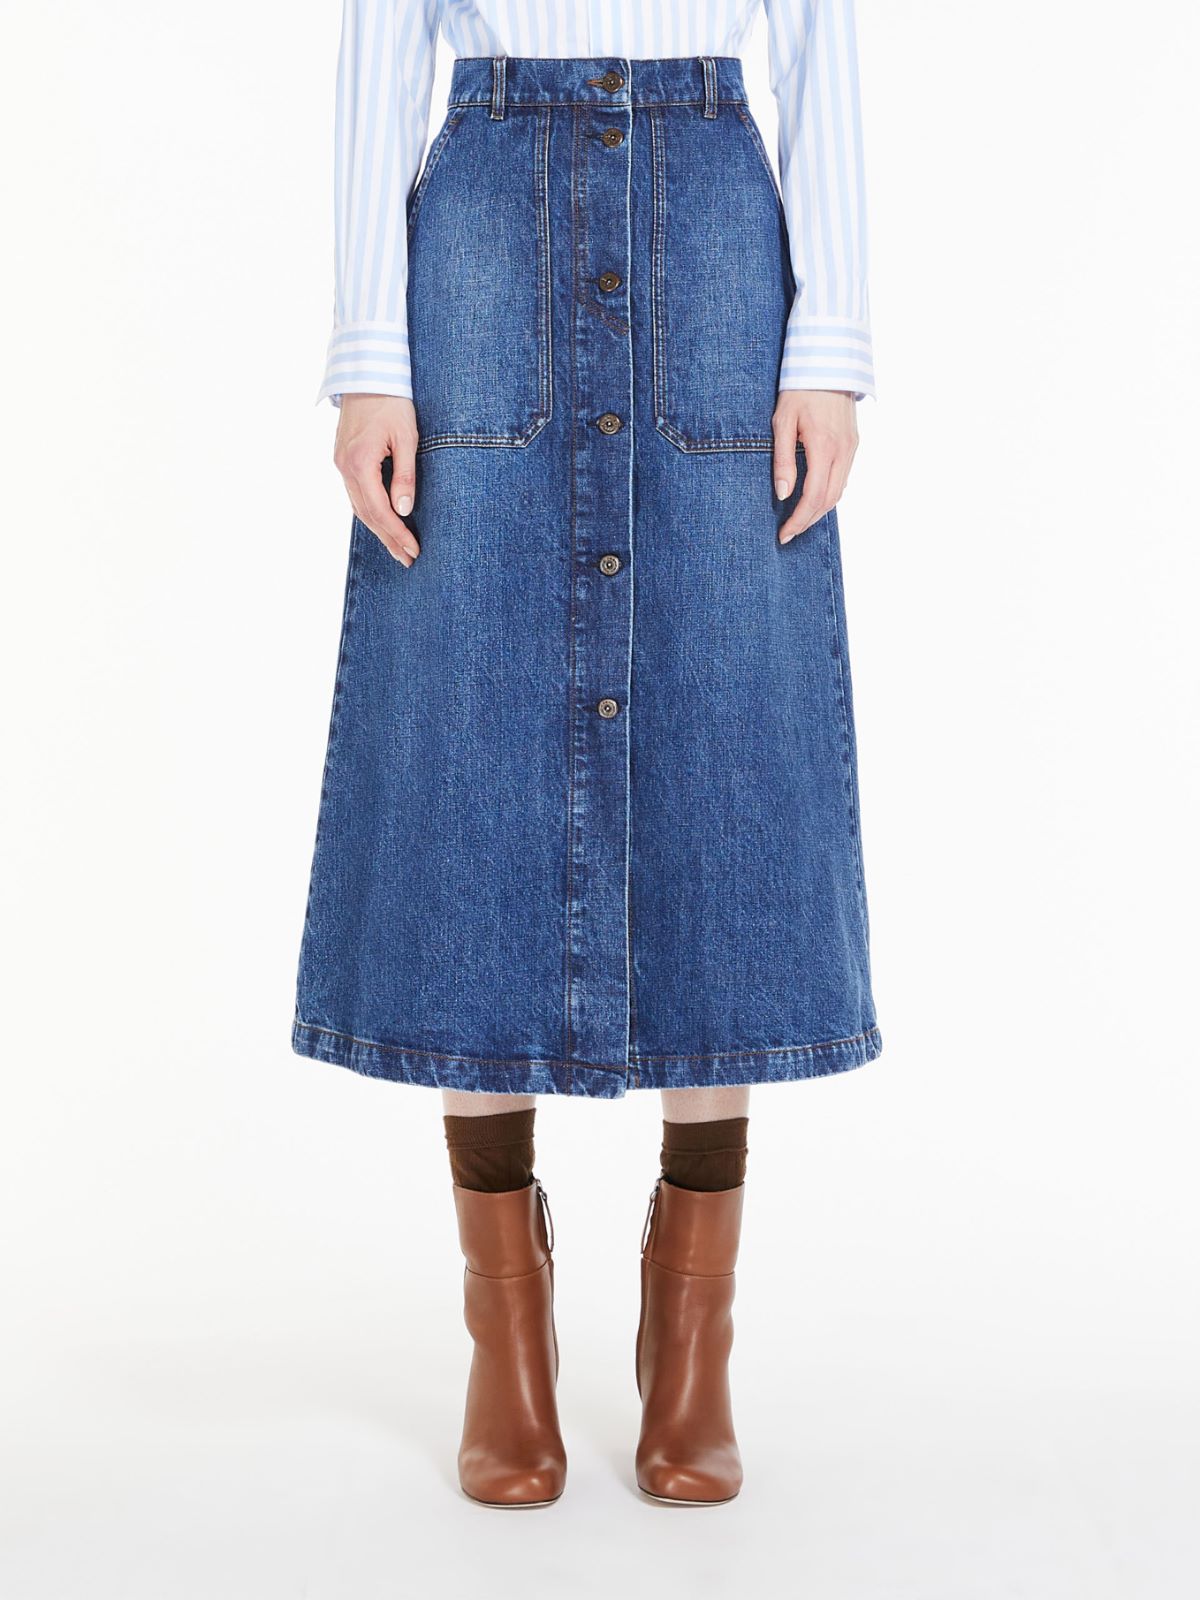 Skirt in organic cotton denim - NAVY - Weekend Max Mara - 2